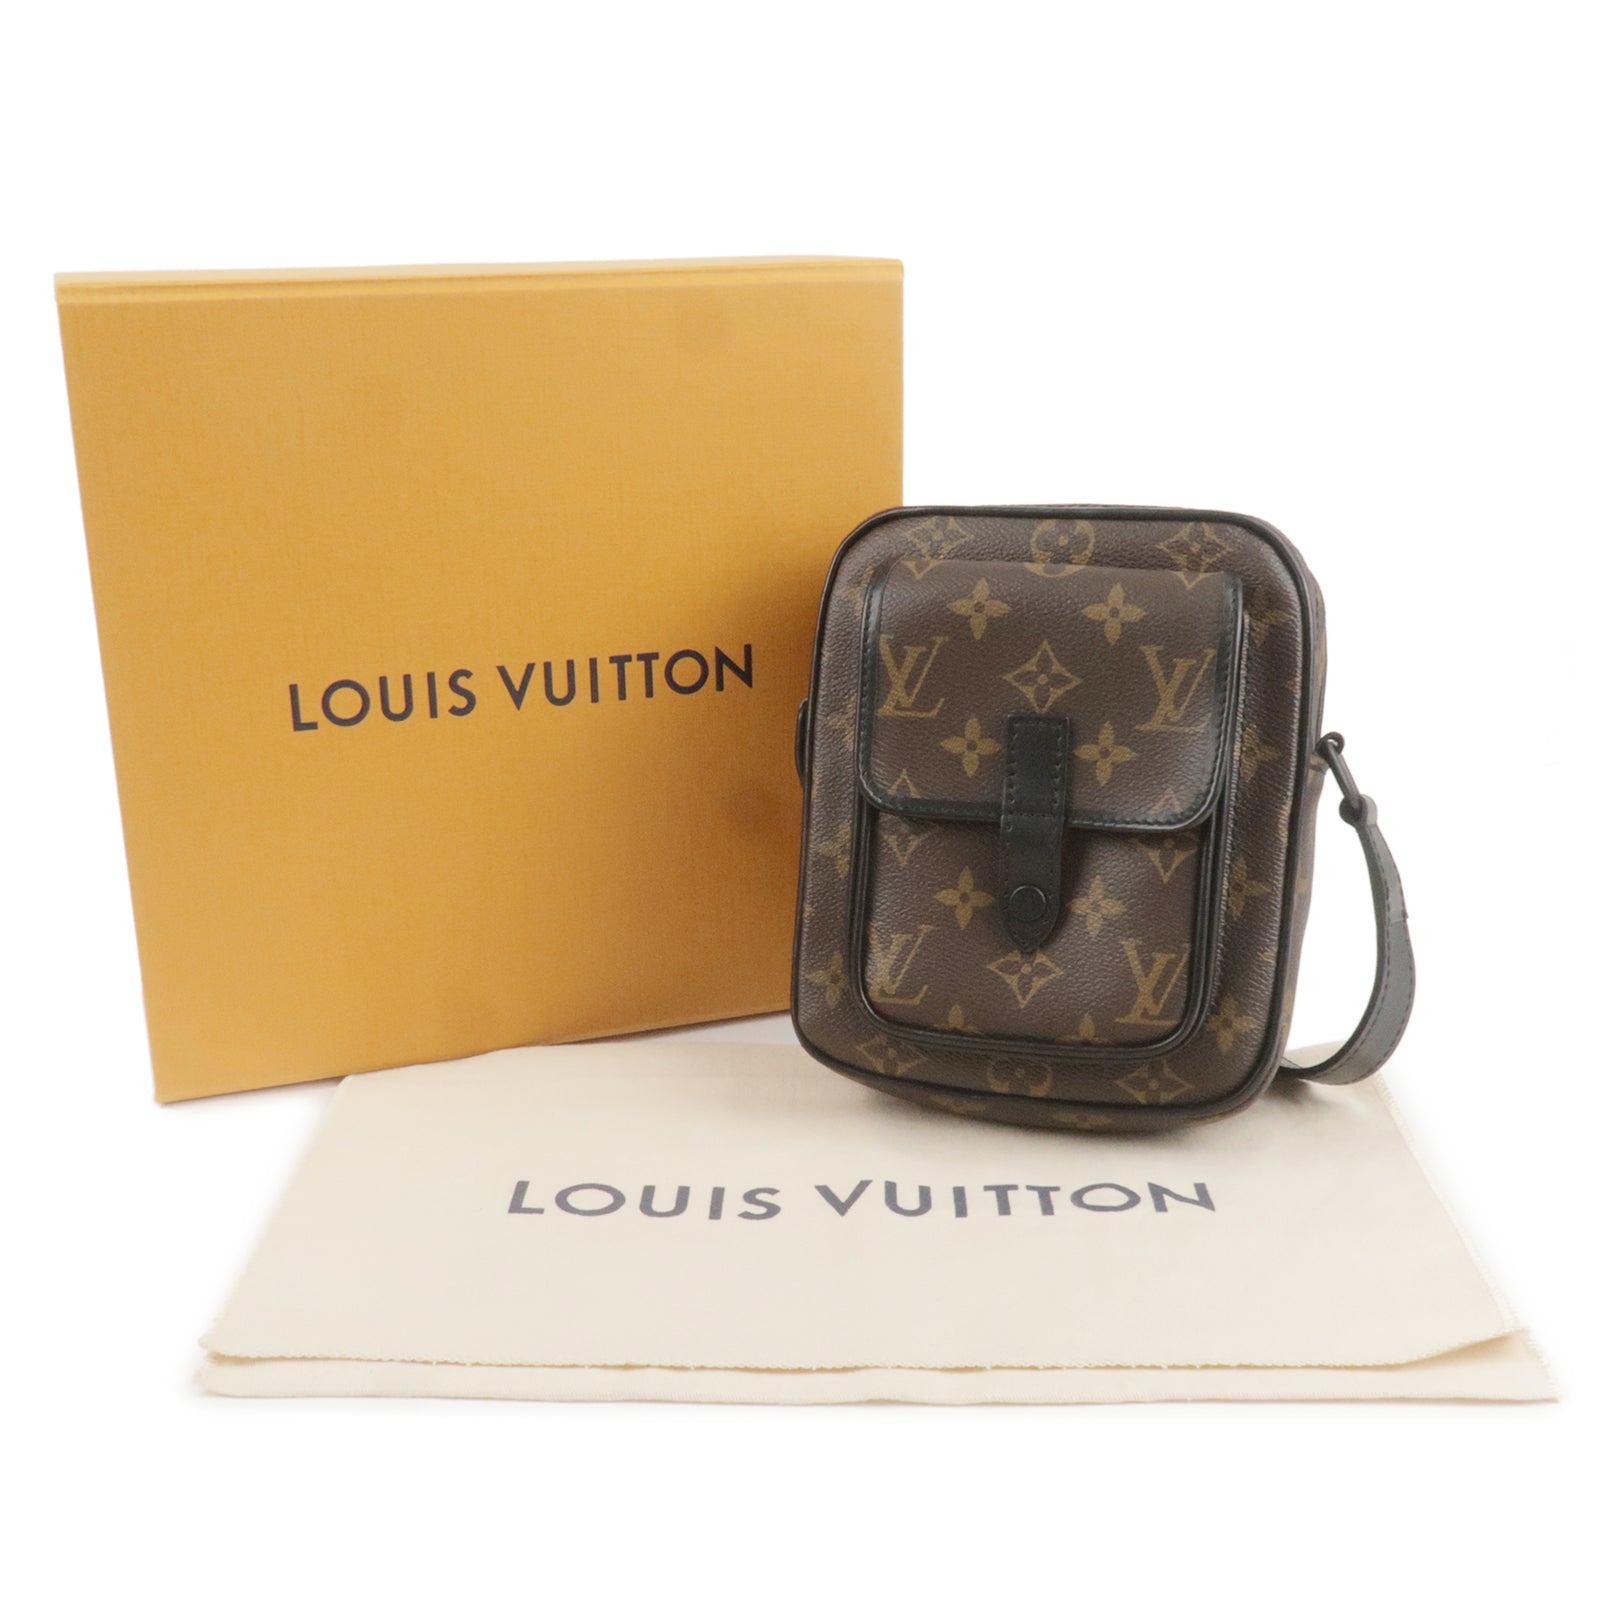 Replica Louis Vuitton Handbags - Shop on Pinterest